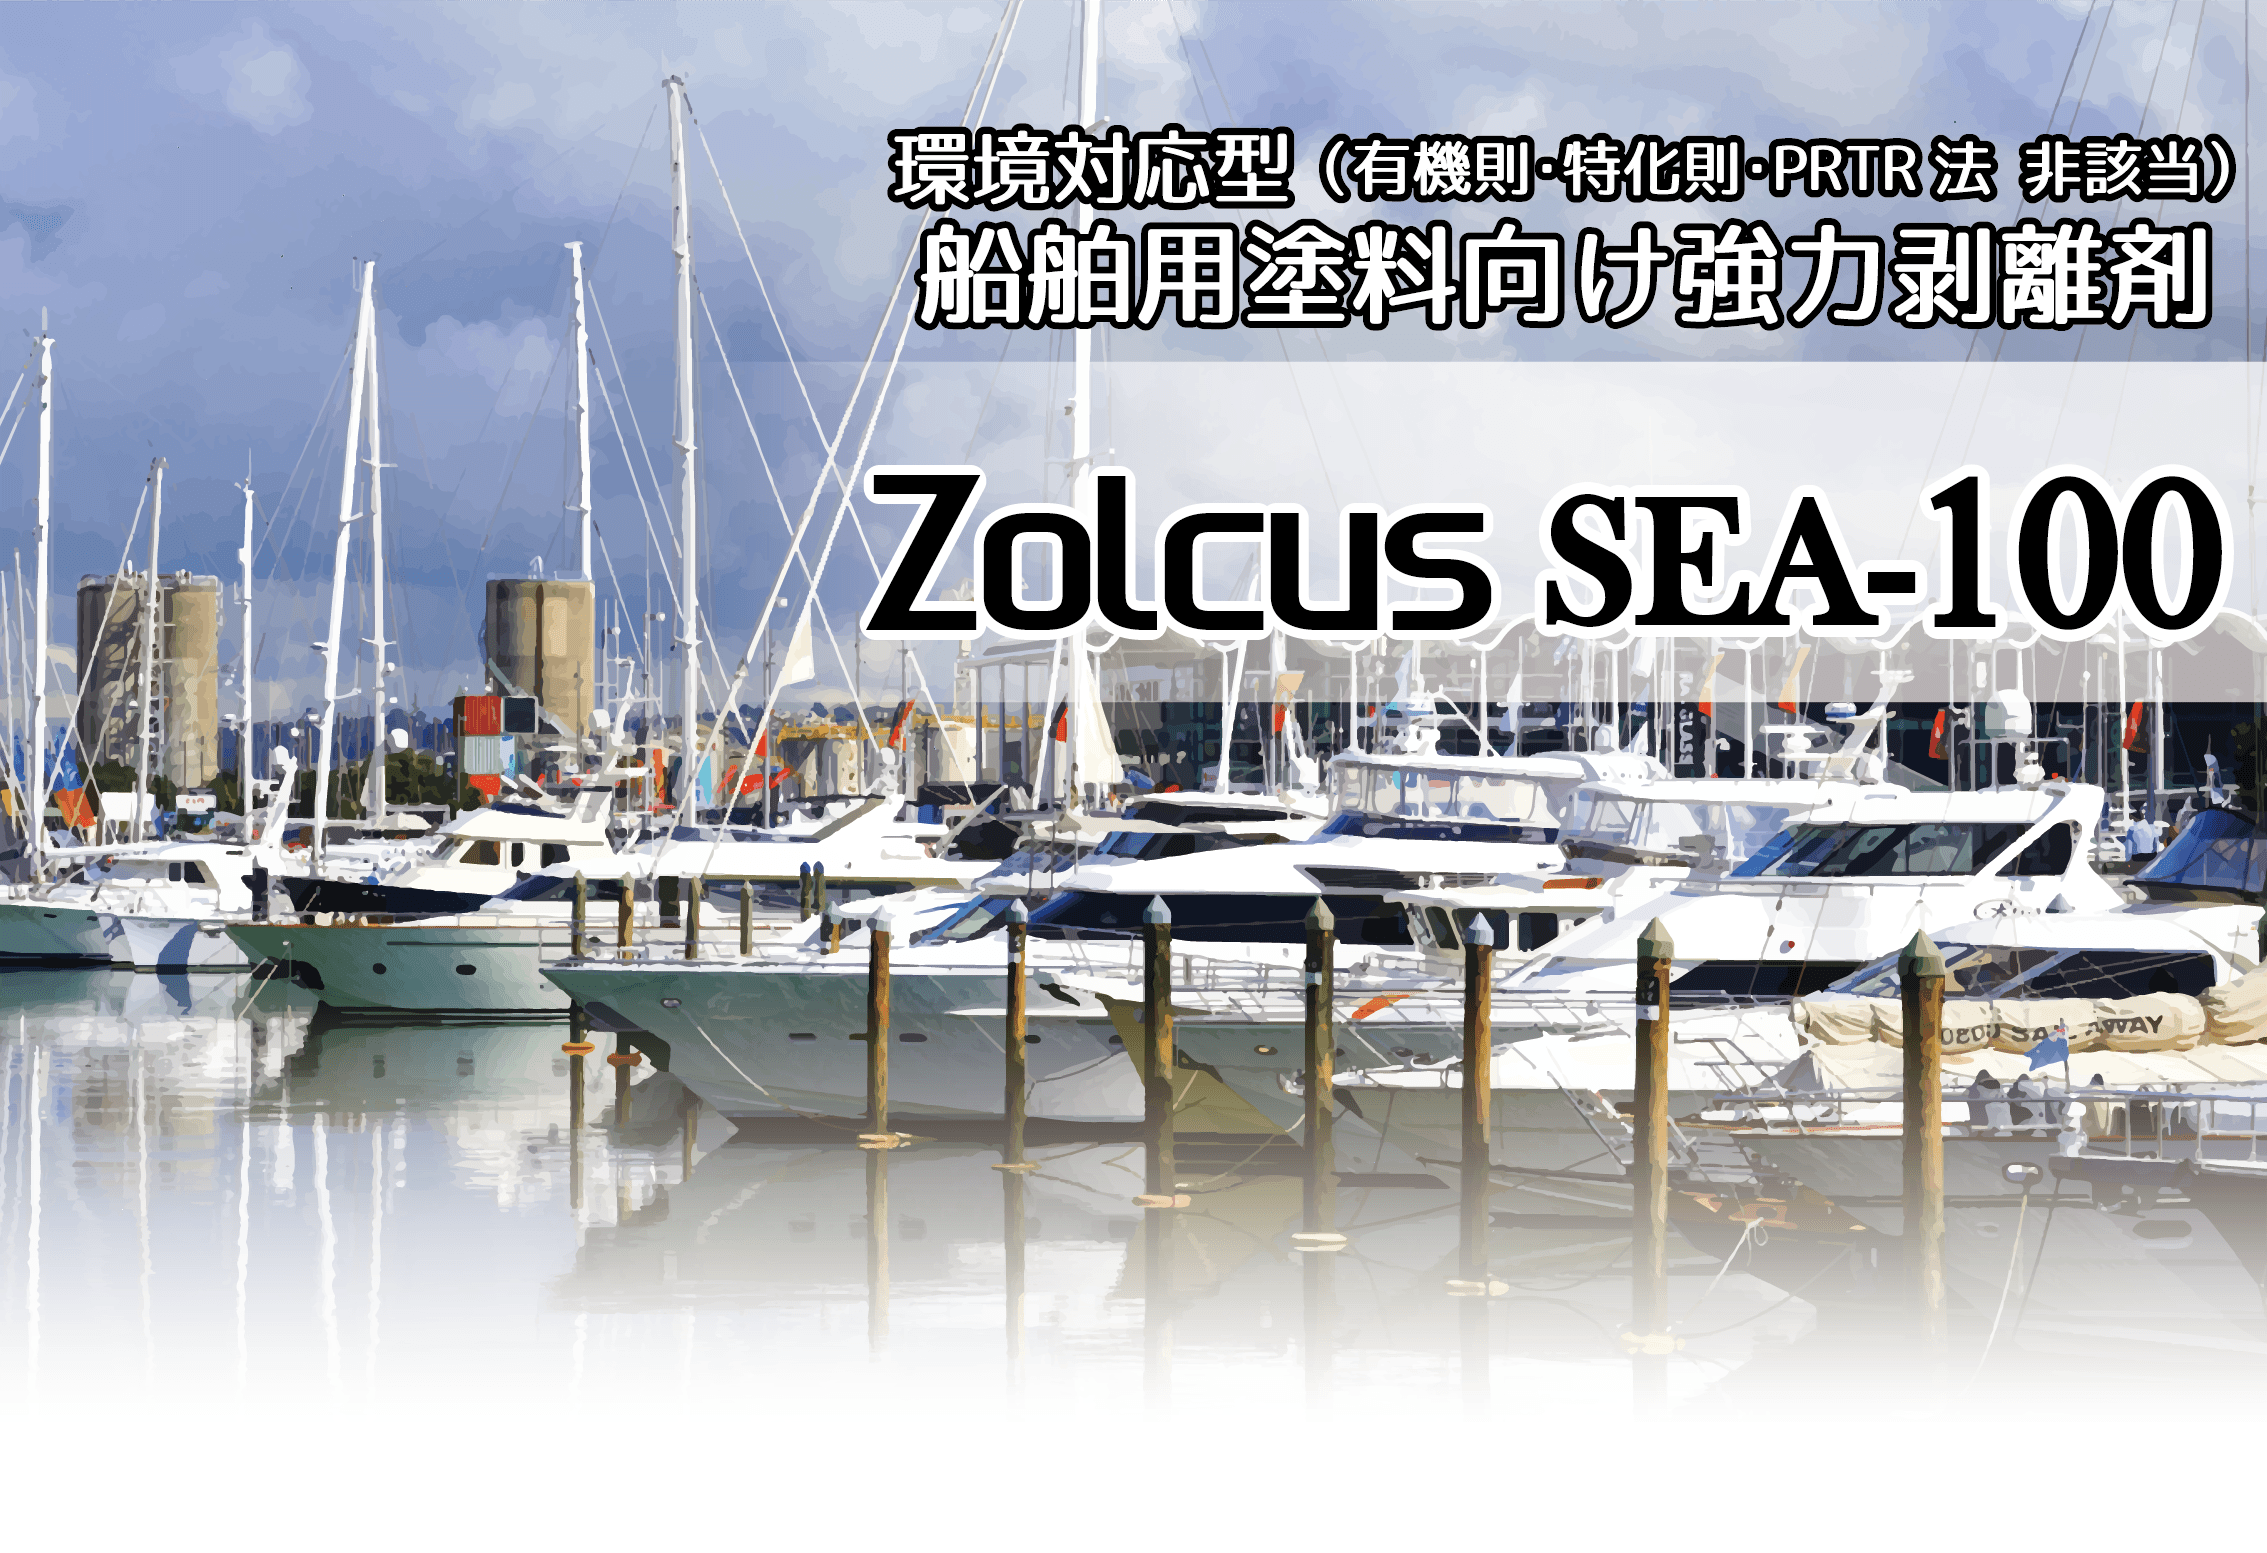 Zolcus Sea 100 ゾルカスsea 100 船舶用塗料向け強力剥離剤 三協化学株式会社